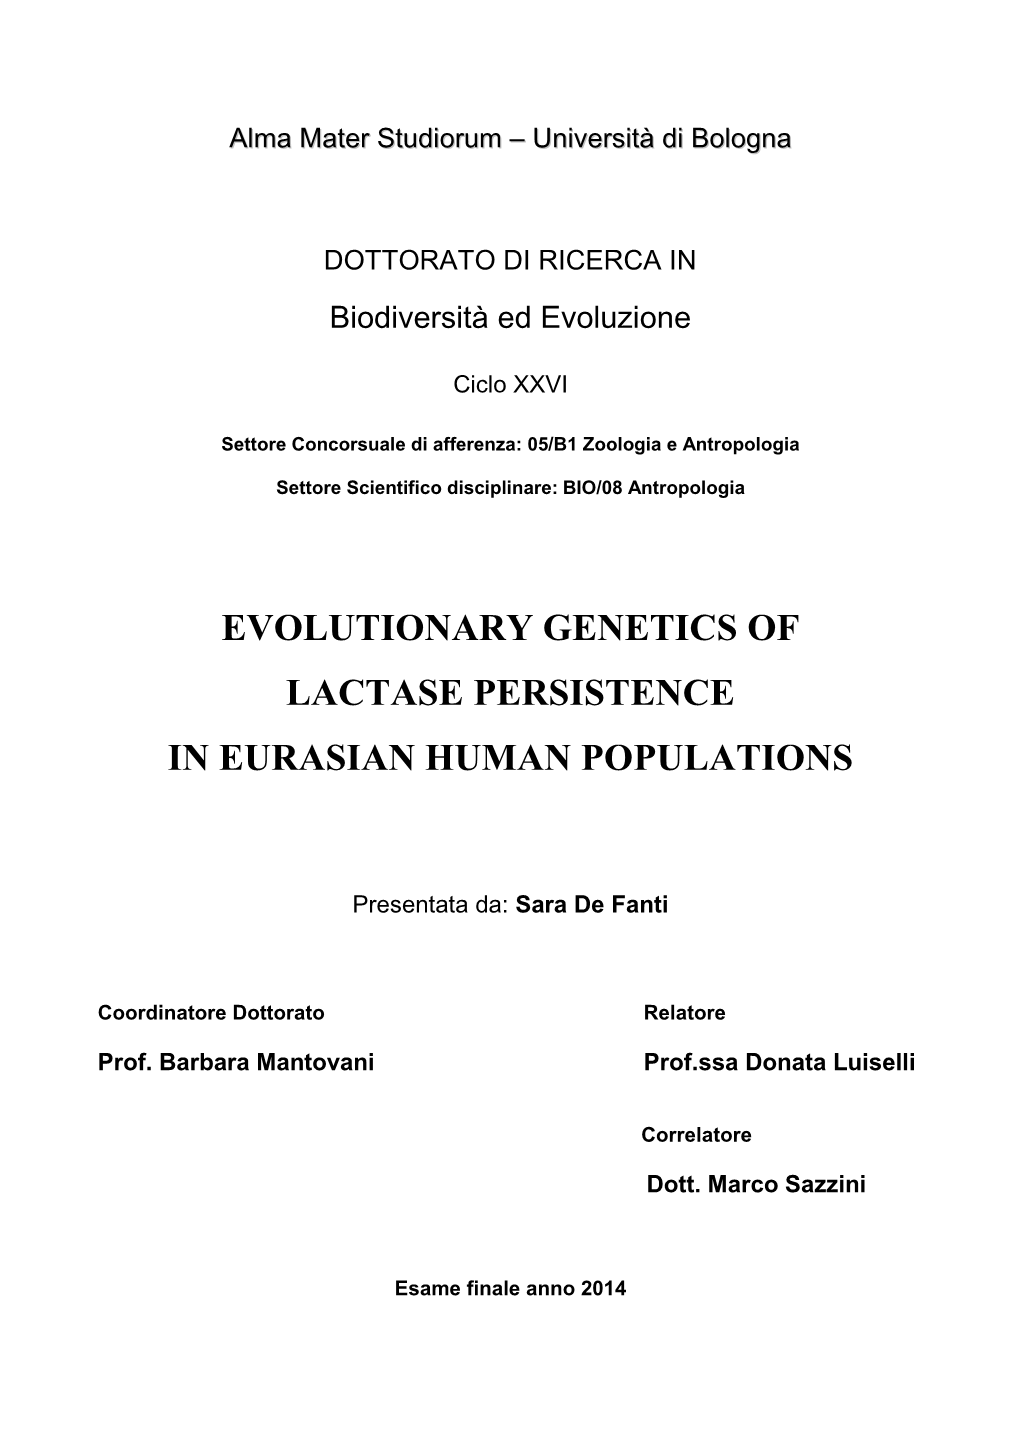 Evolutionary Genetics of Lactase Persistence in Eurasian Human Populations